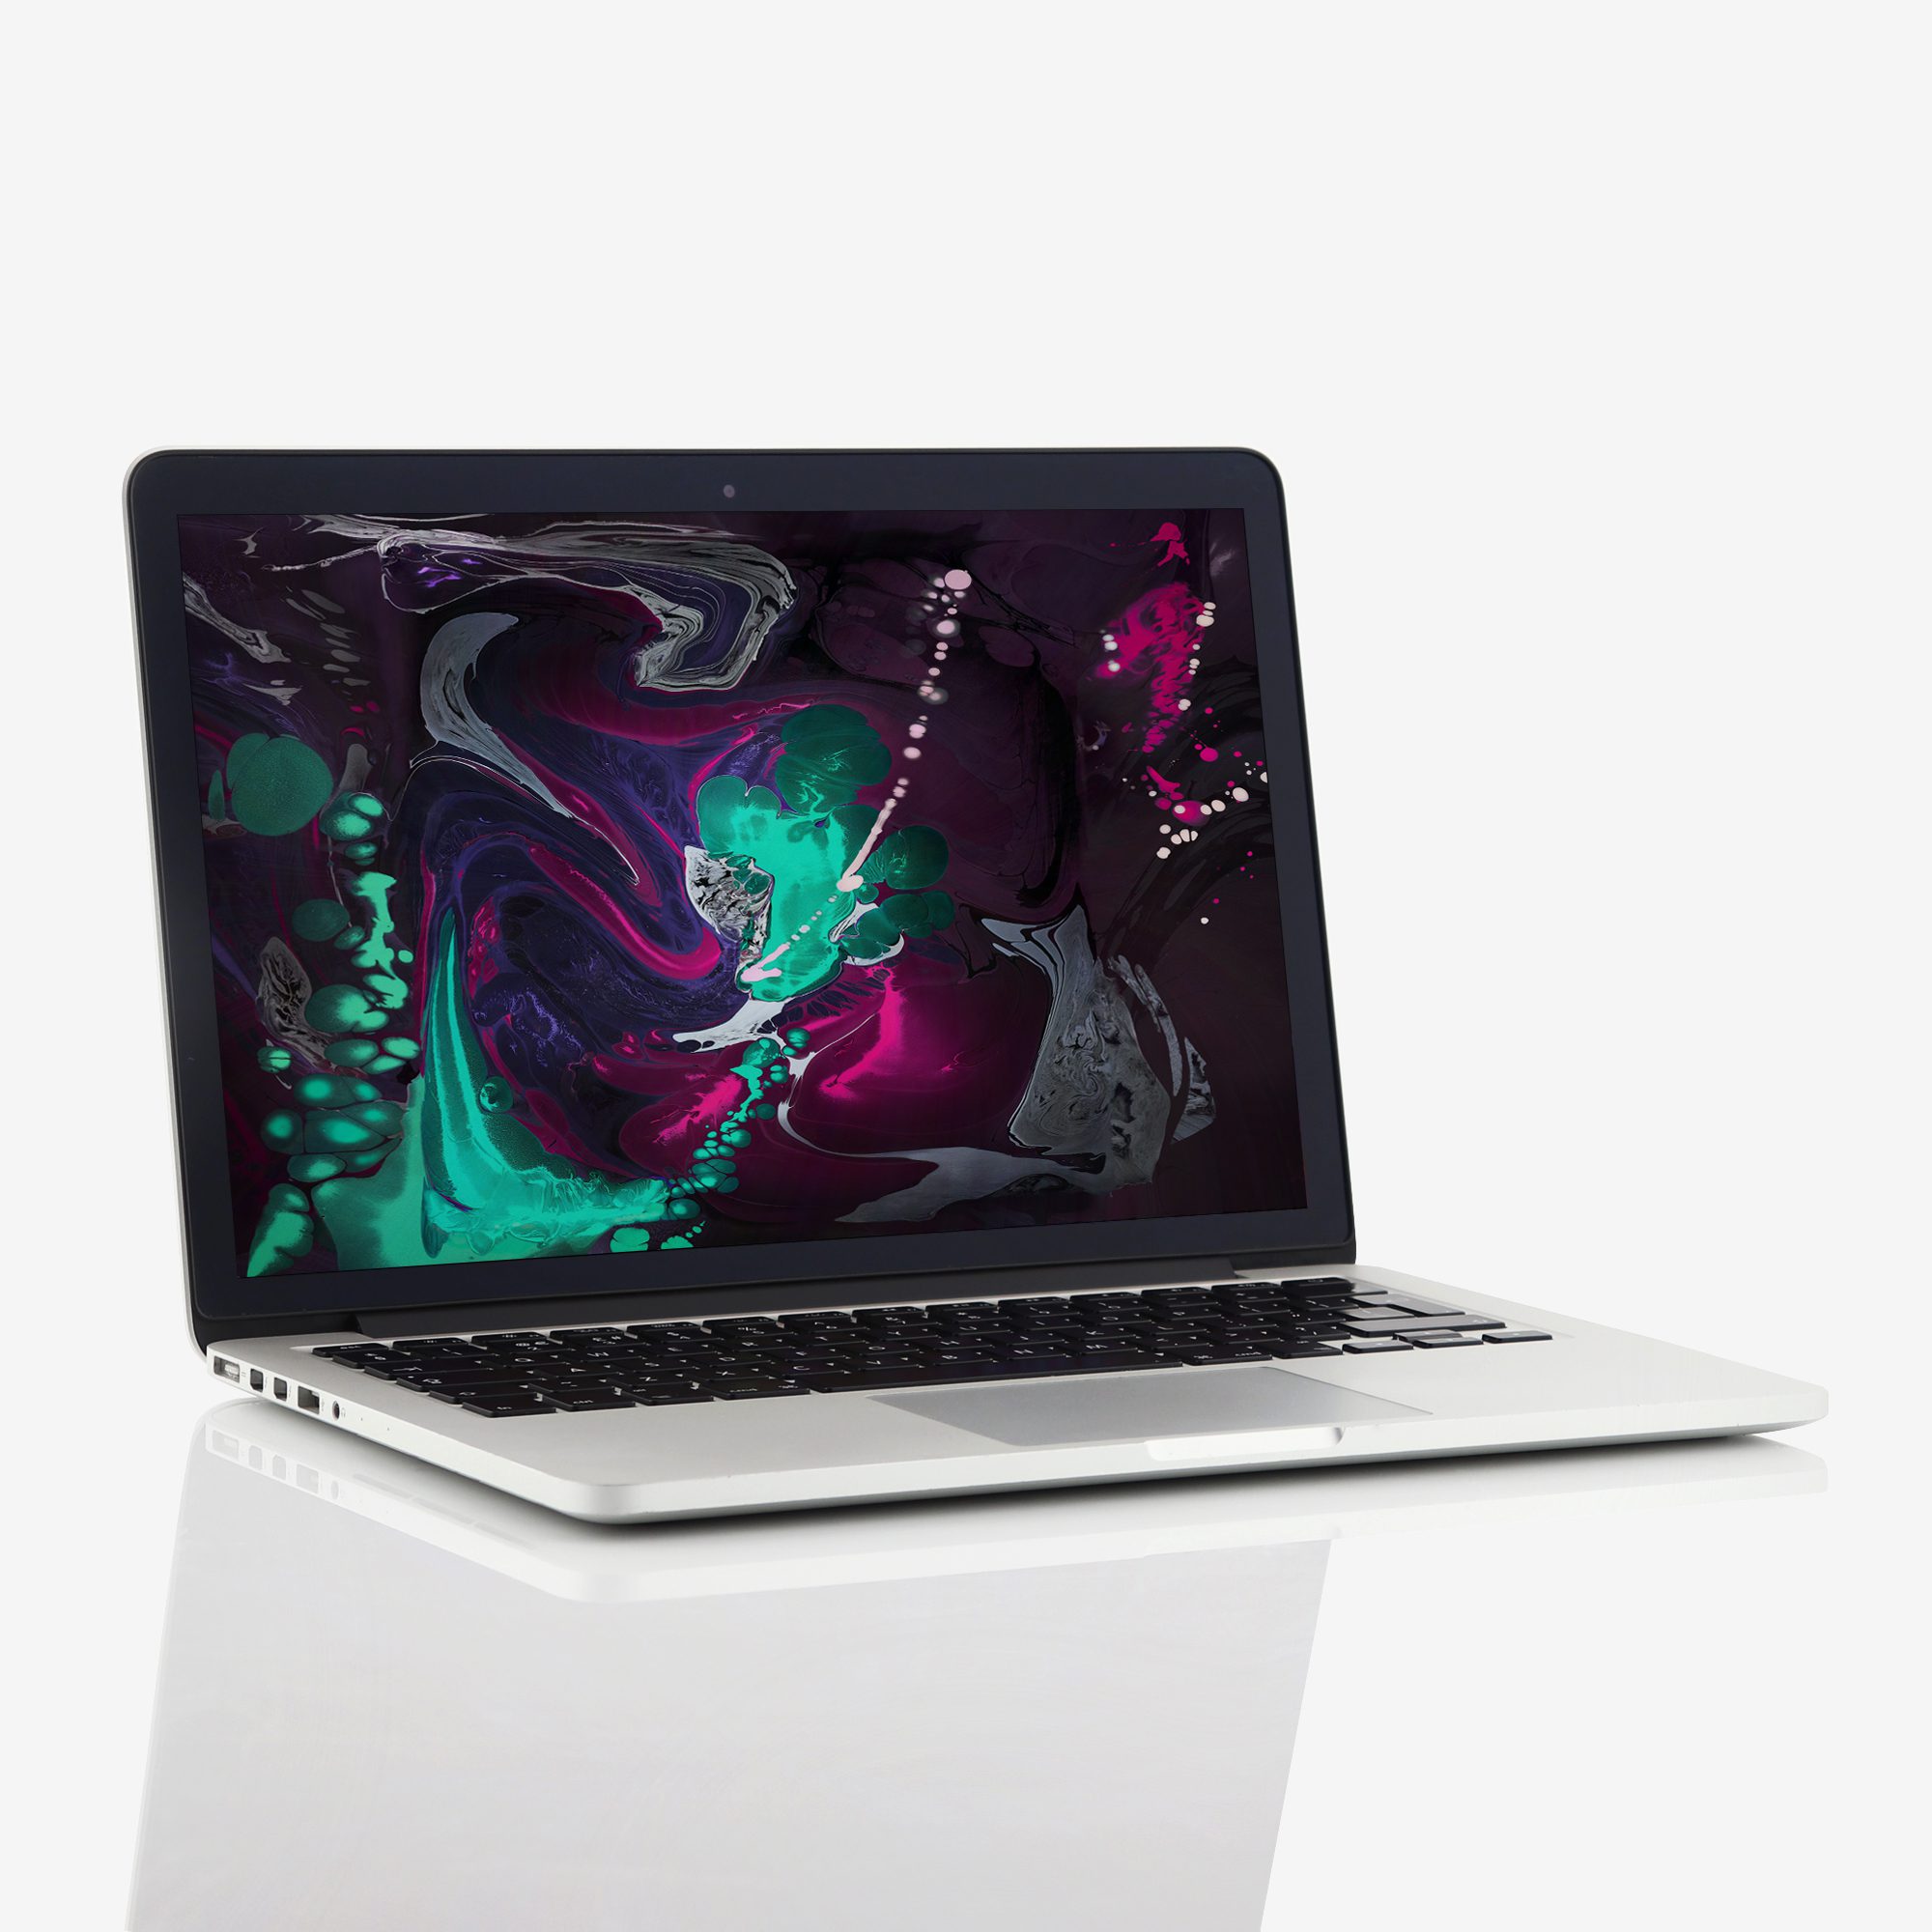 1 x Apple MacBook Pro Retina 13 Inch Intel Core i7 3.00 GHz (2014)